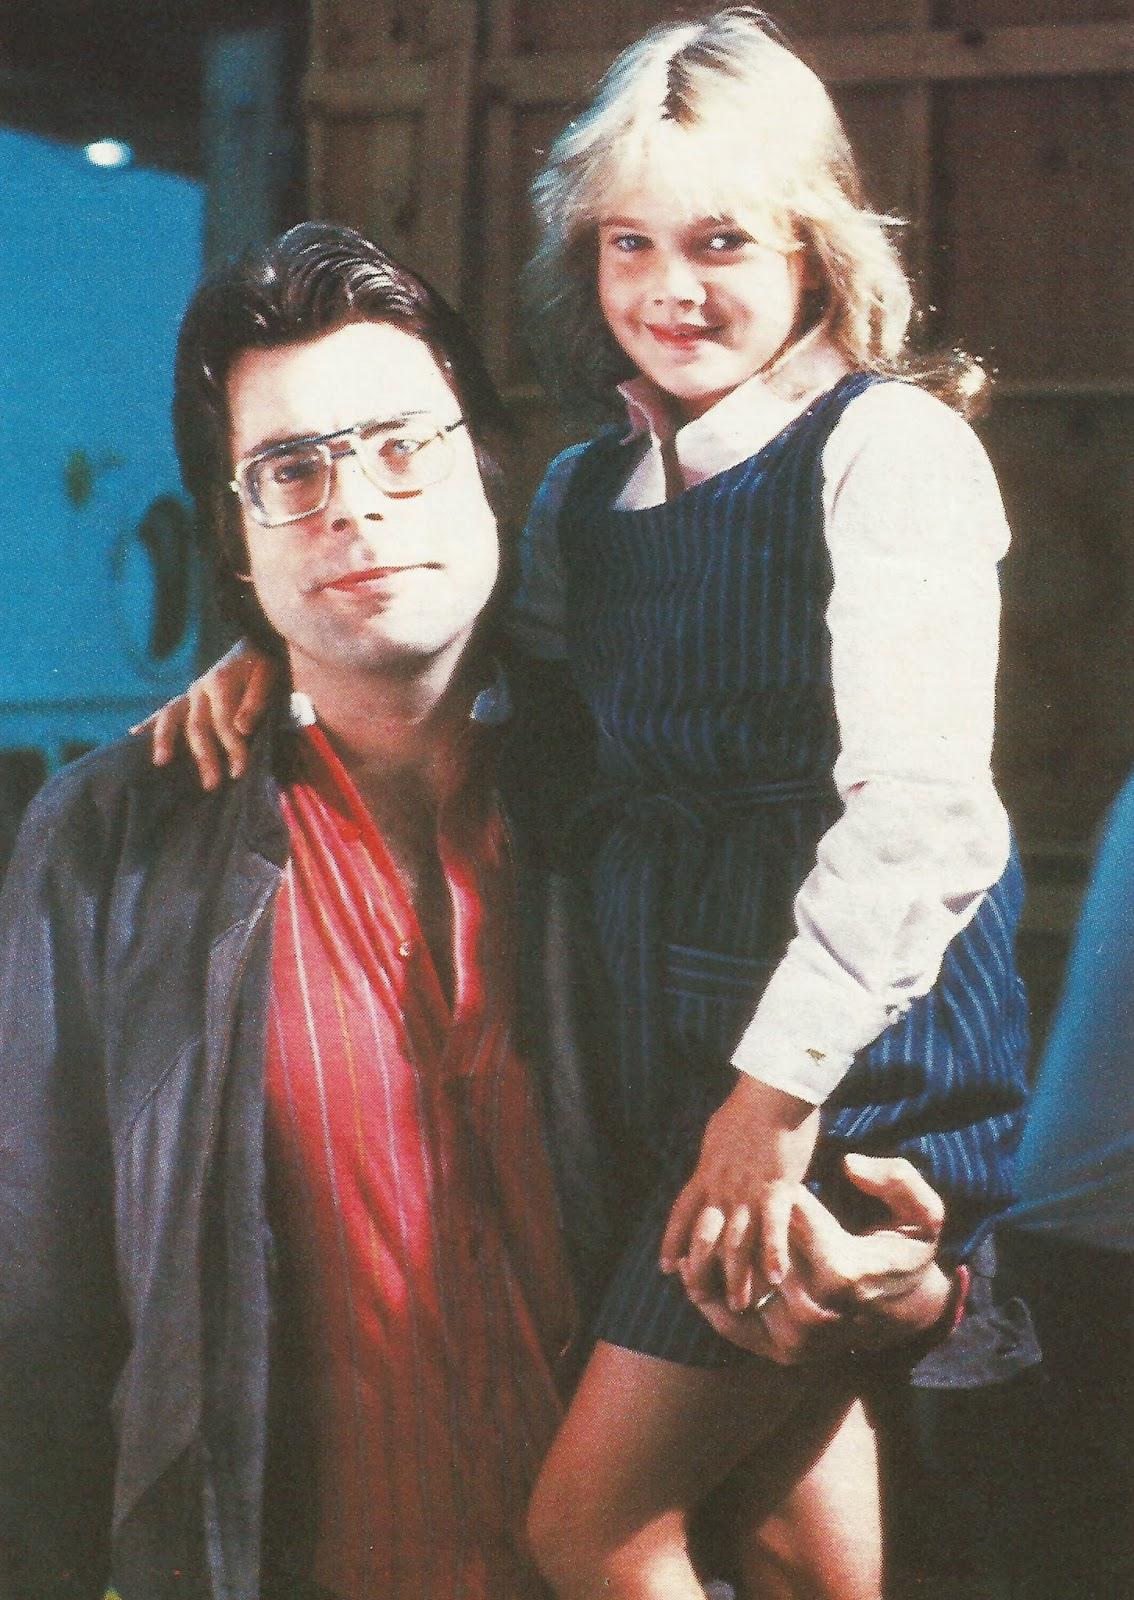 Stephen King and Drew Barrymore on the set of Firestarter [Dossier] Stephen King au cinéma : du papier à la pellicule 